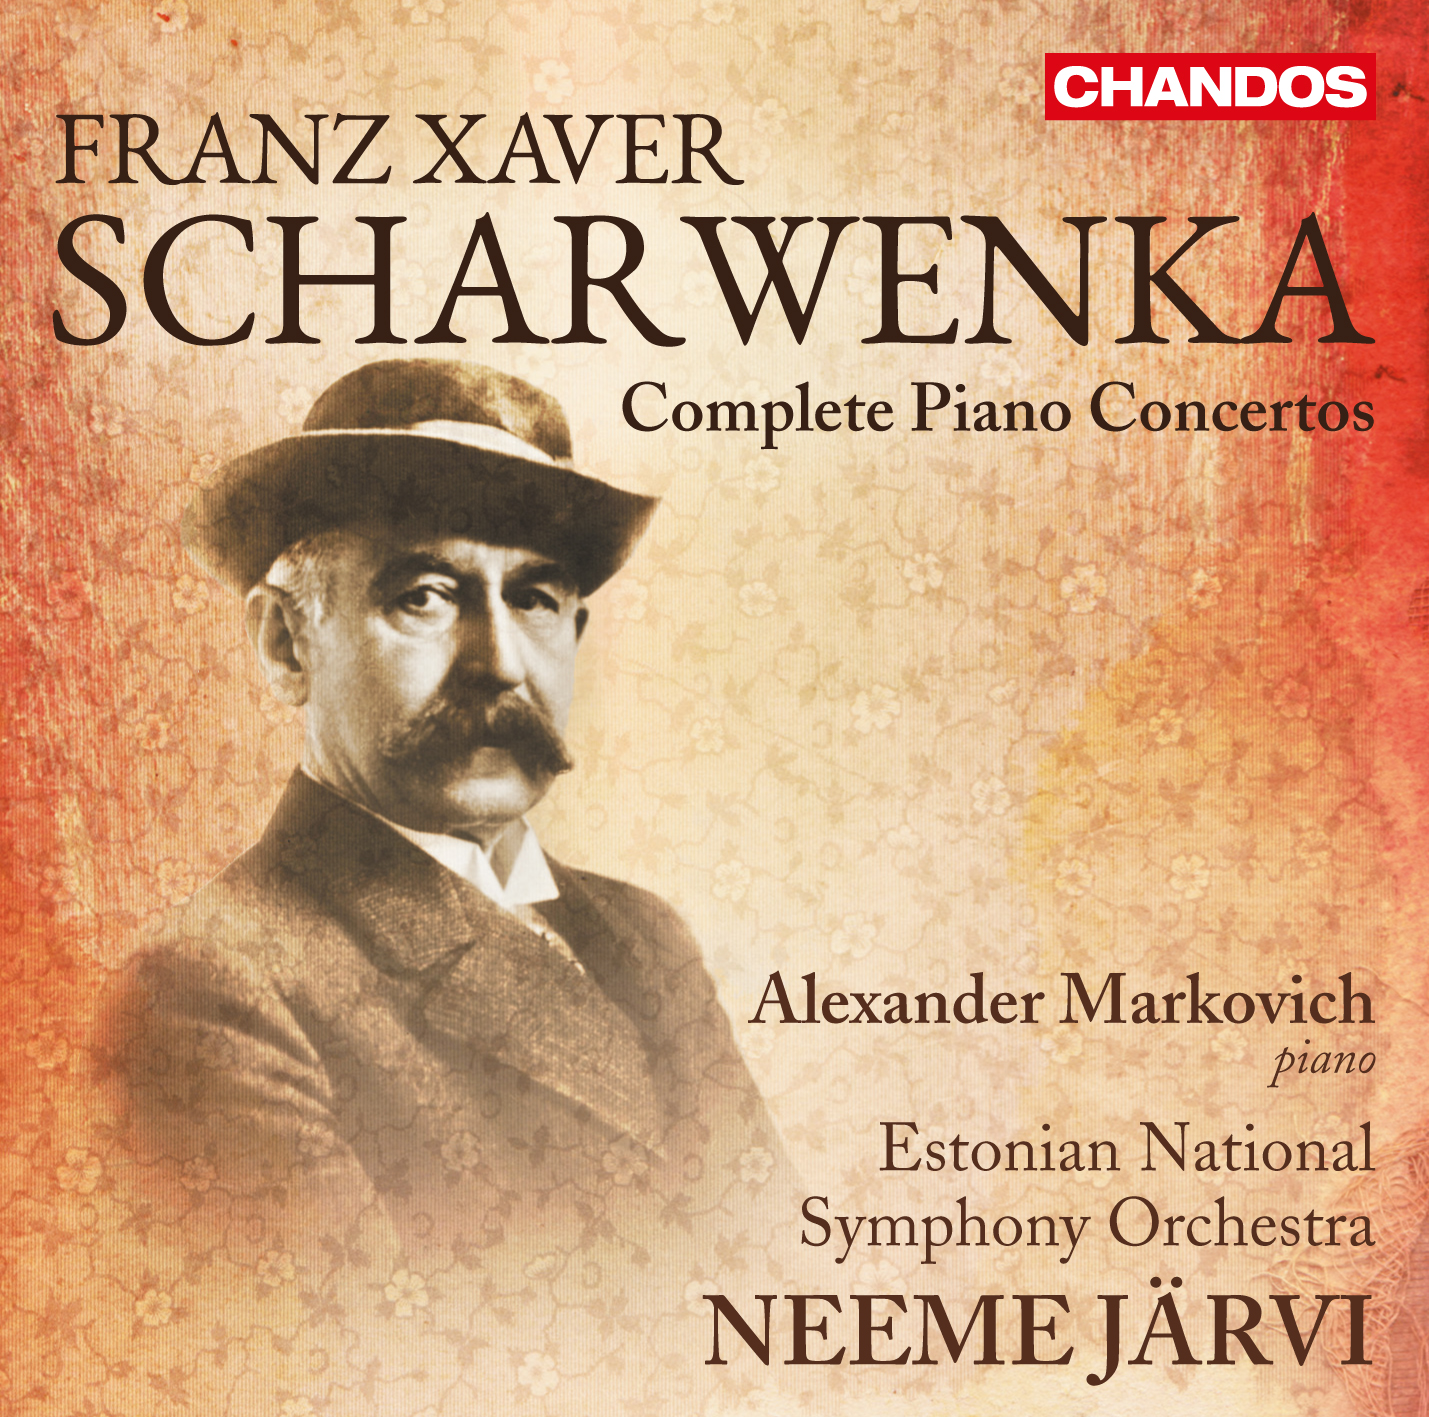 FRANZ XAVER SCHARWENKA – klaverikontserdid. Aleksandr Markovitš, Neeme Järvi. Chandos 2014